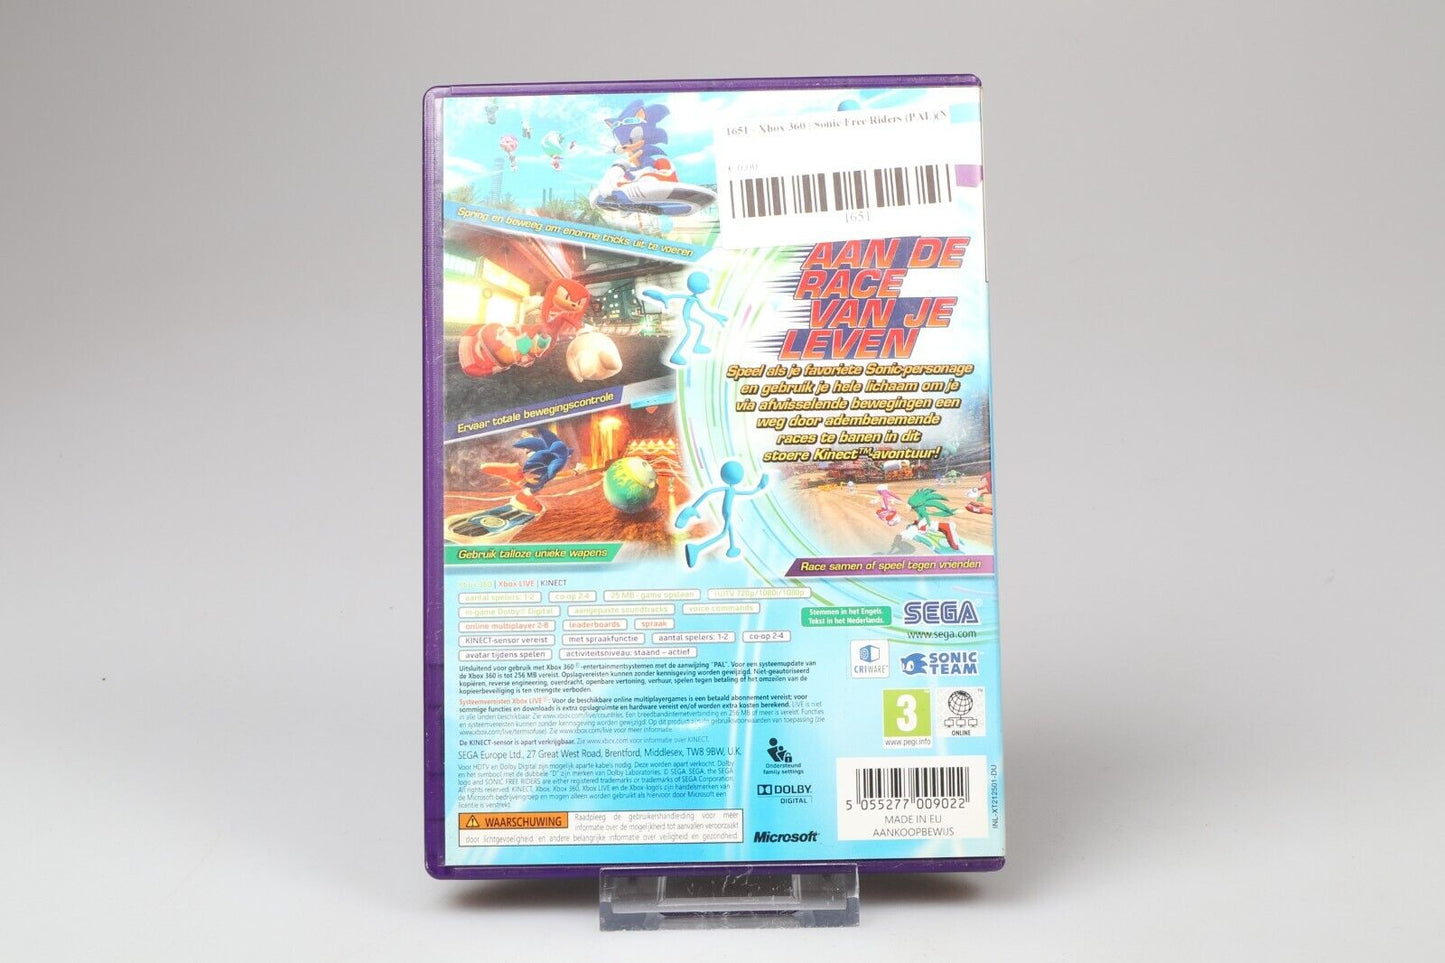 Xbox360 | Sonic Free Riders (PAL)(NL) 